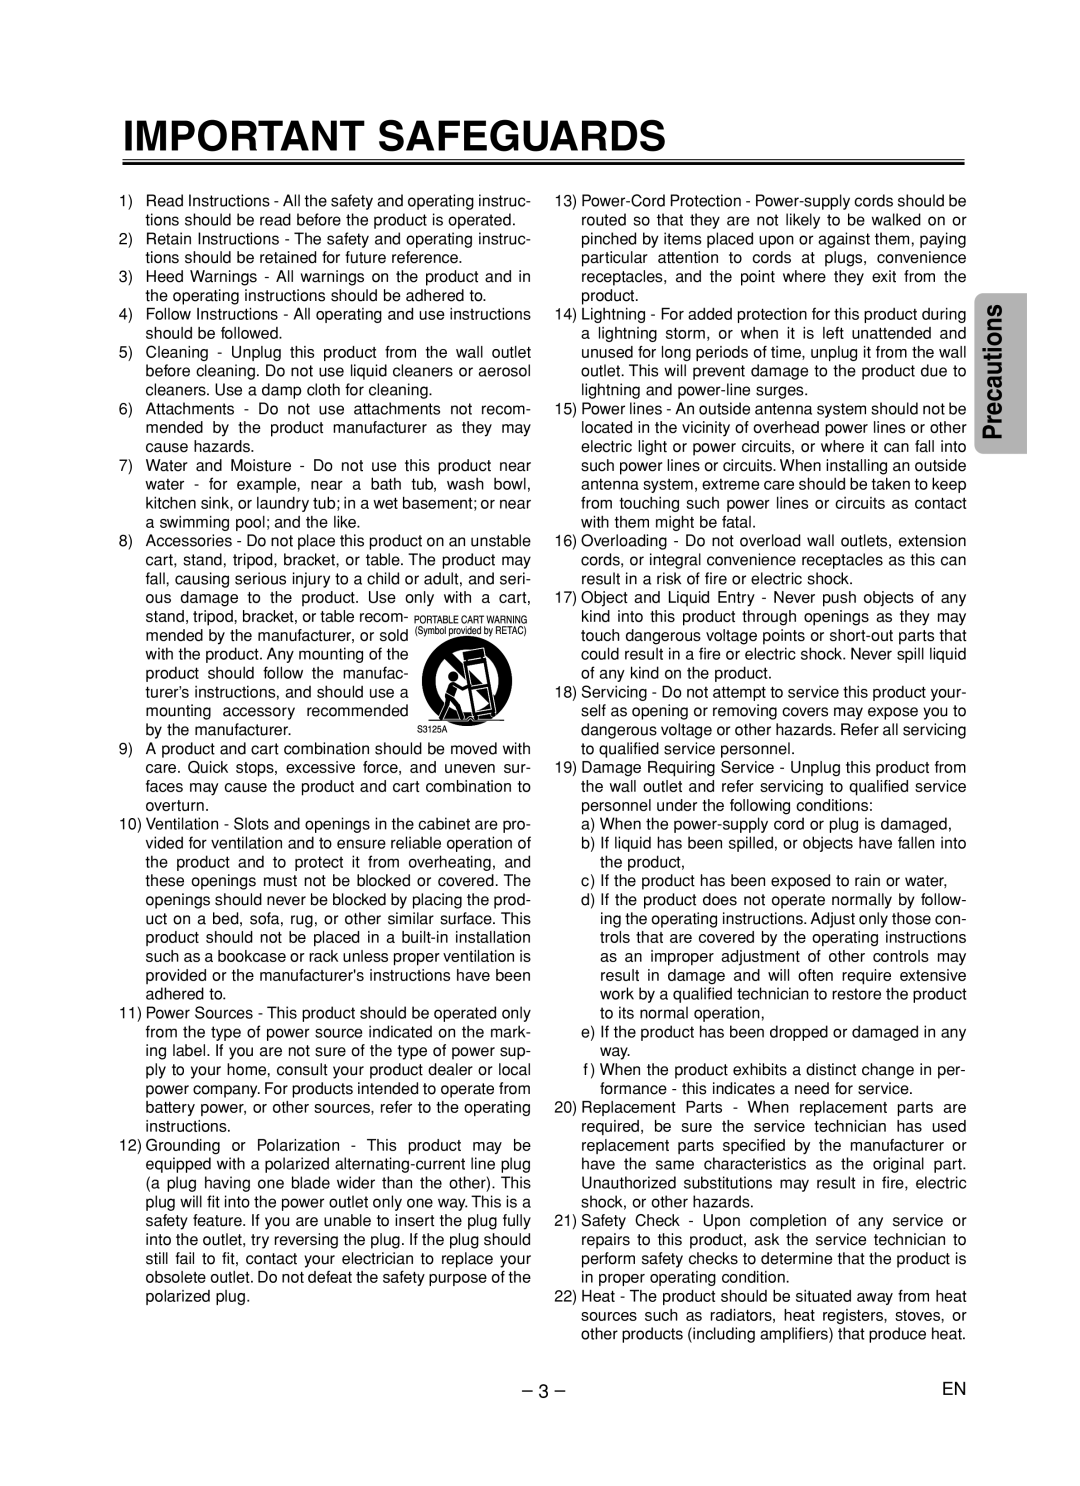 FUNAI MSD125 owner manual Important Safeguards, Precautions 